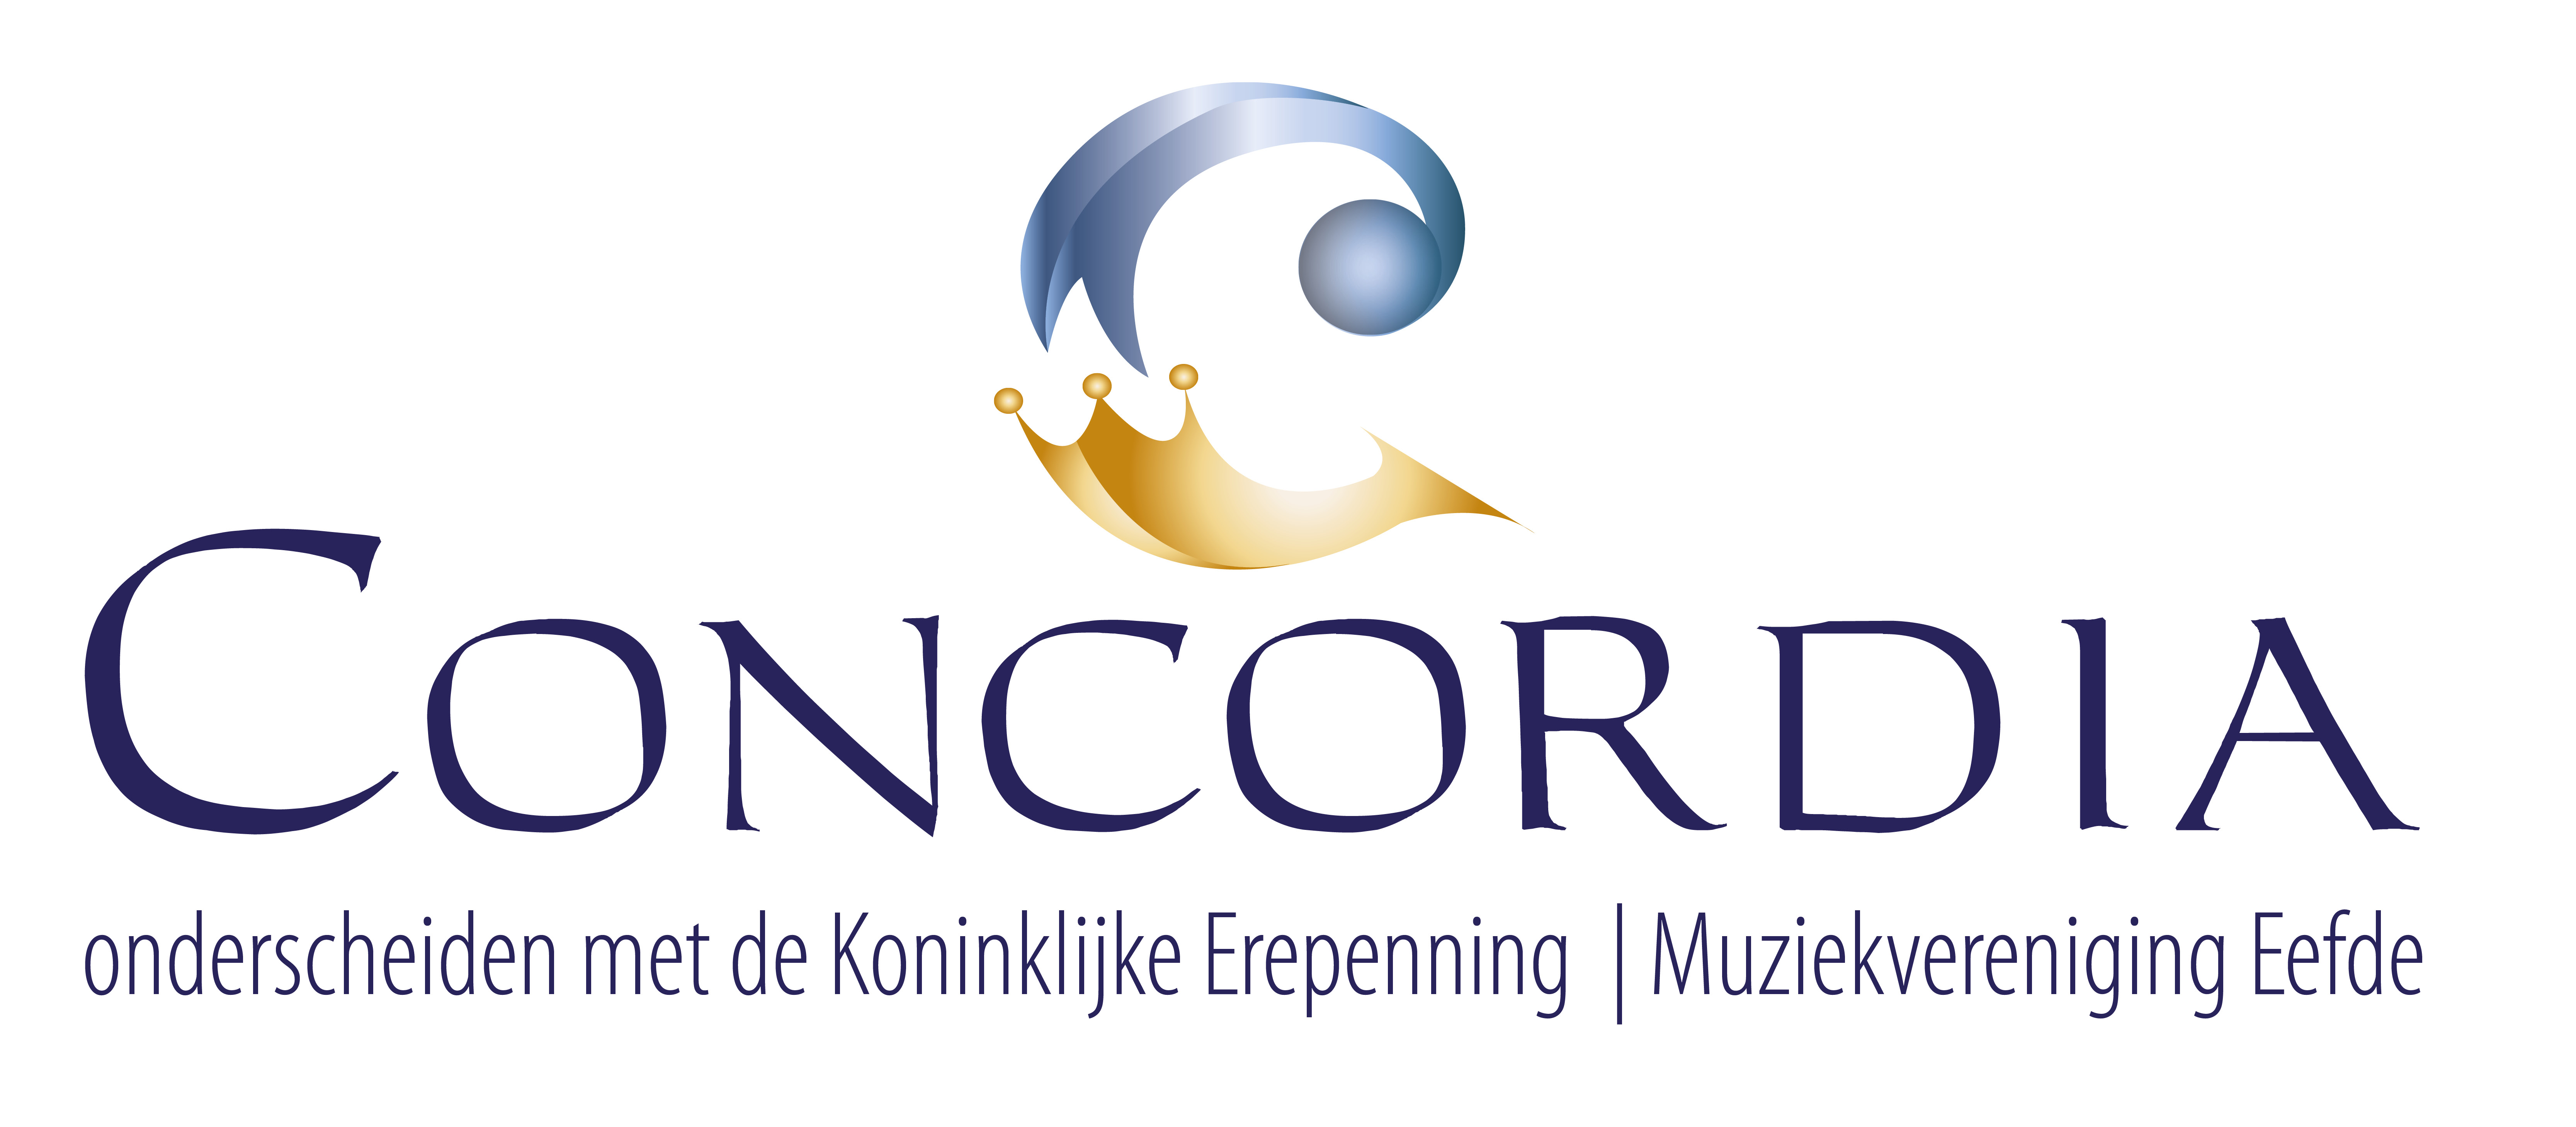 Webshop van muziekvereniging Concordia Eefde